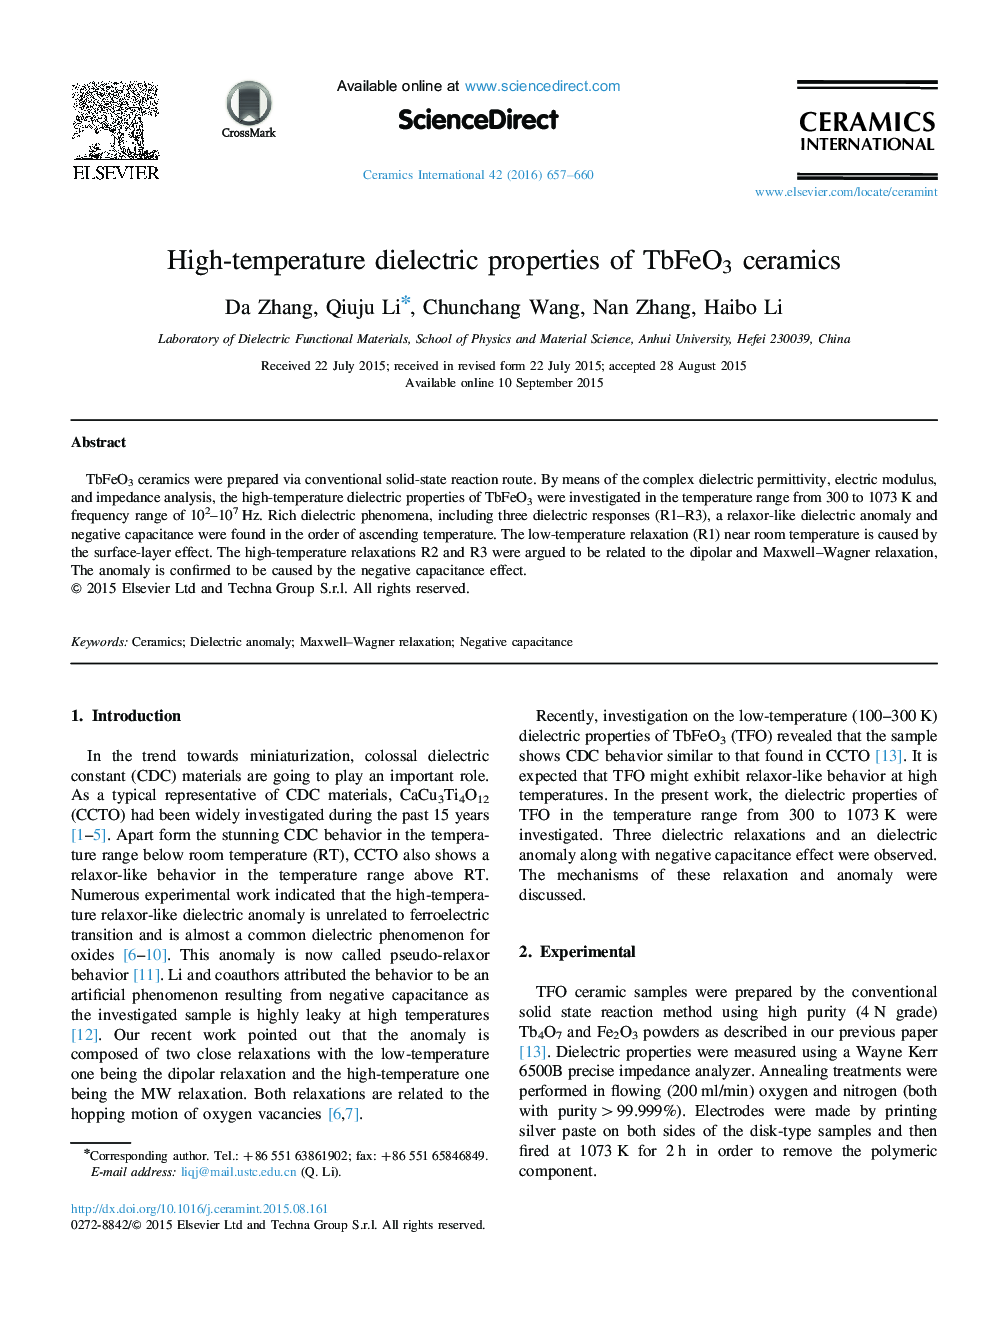 High-temperature dielectric properties of TbFeO3 ceramics